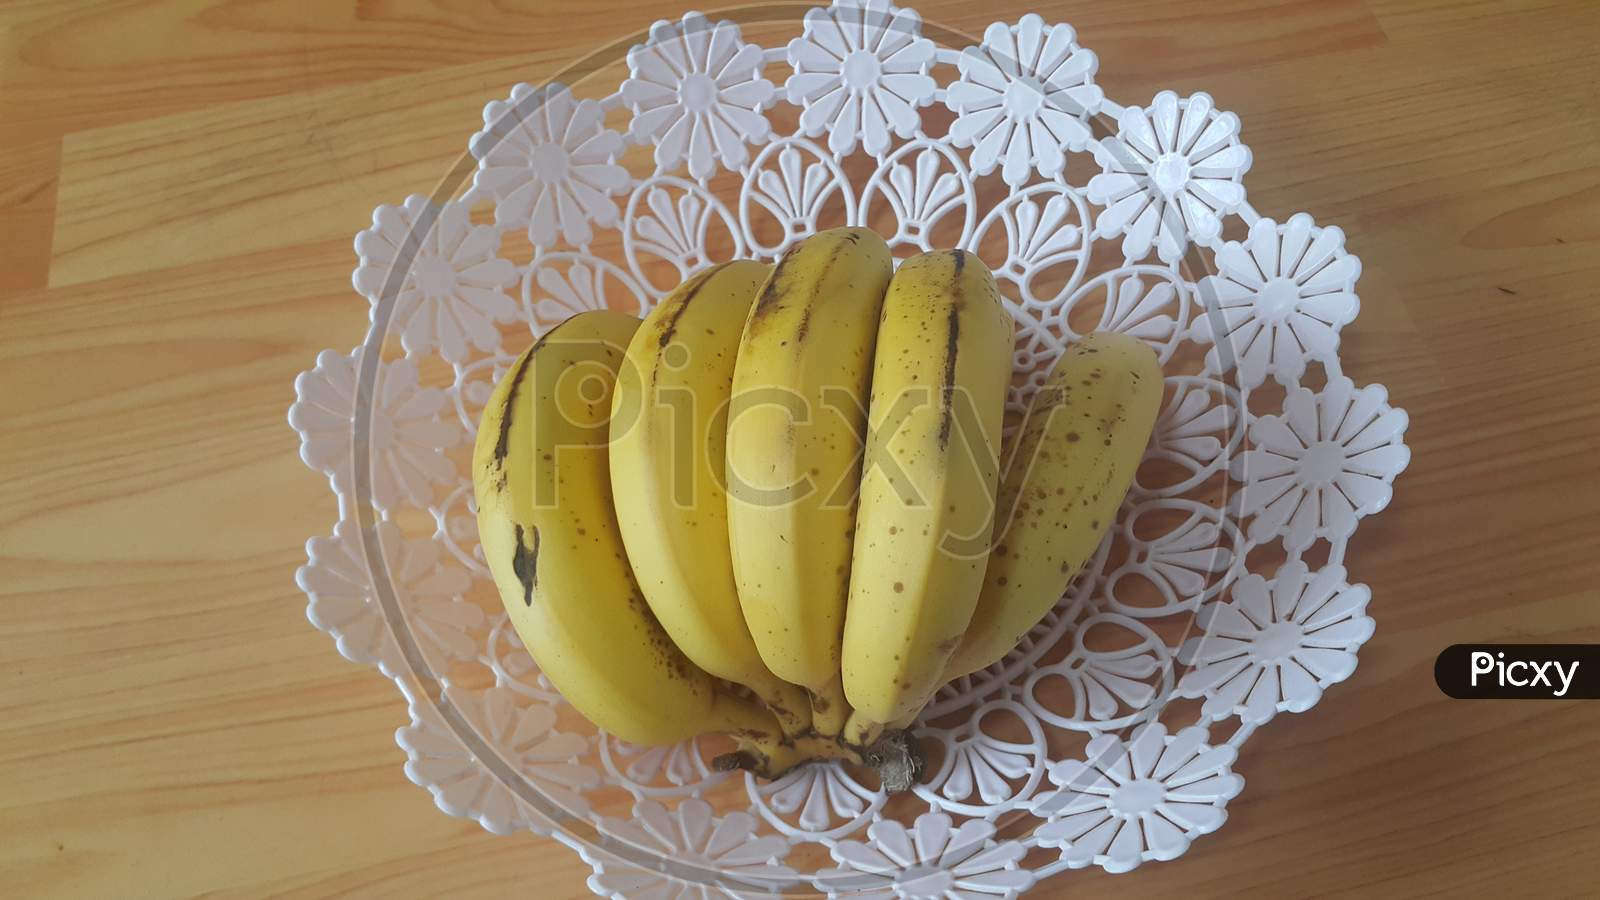 Ripe Banana Placed In Plastic Changair